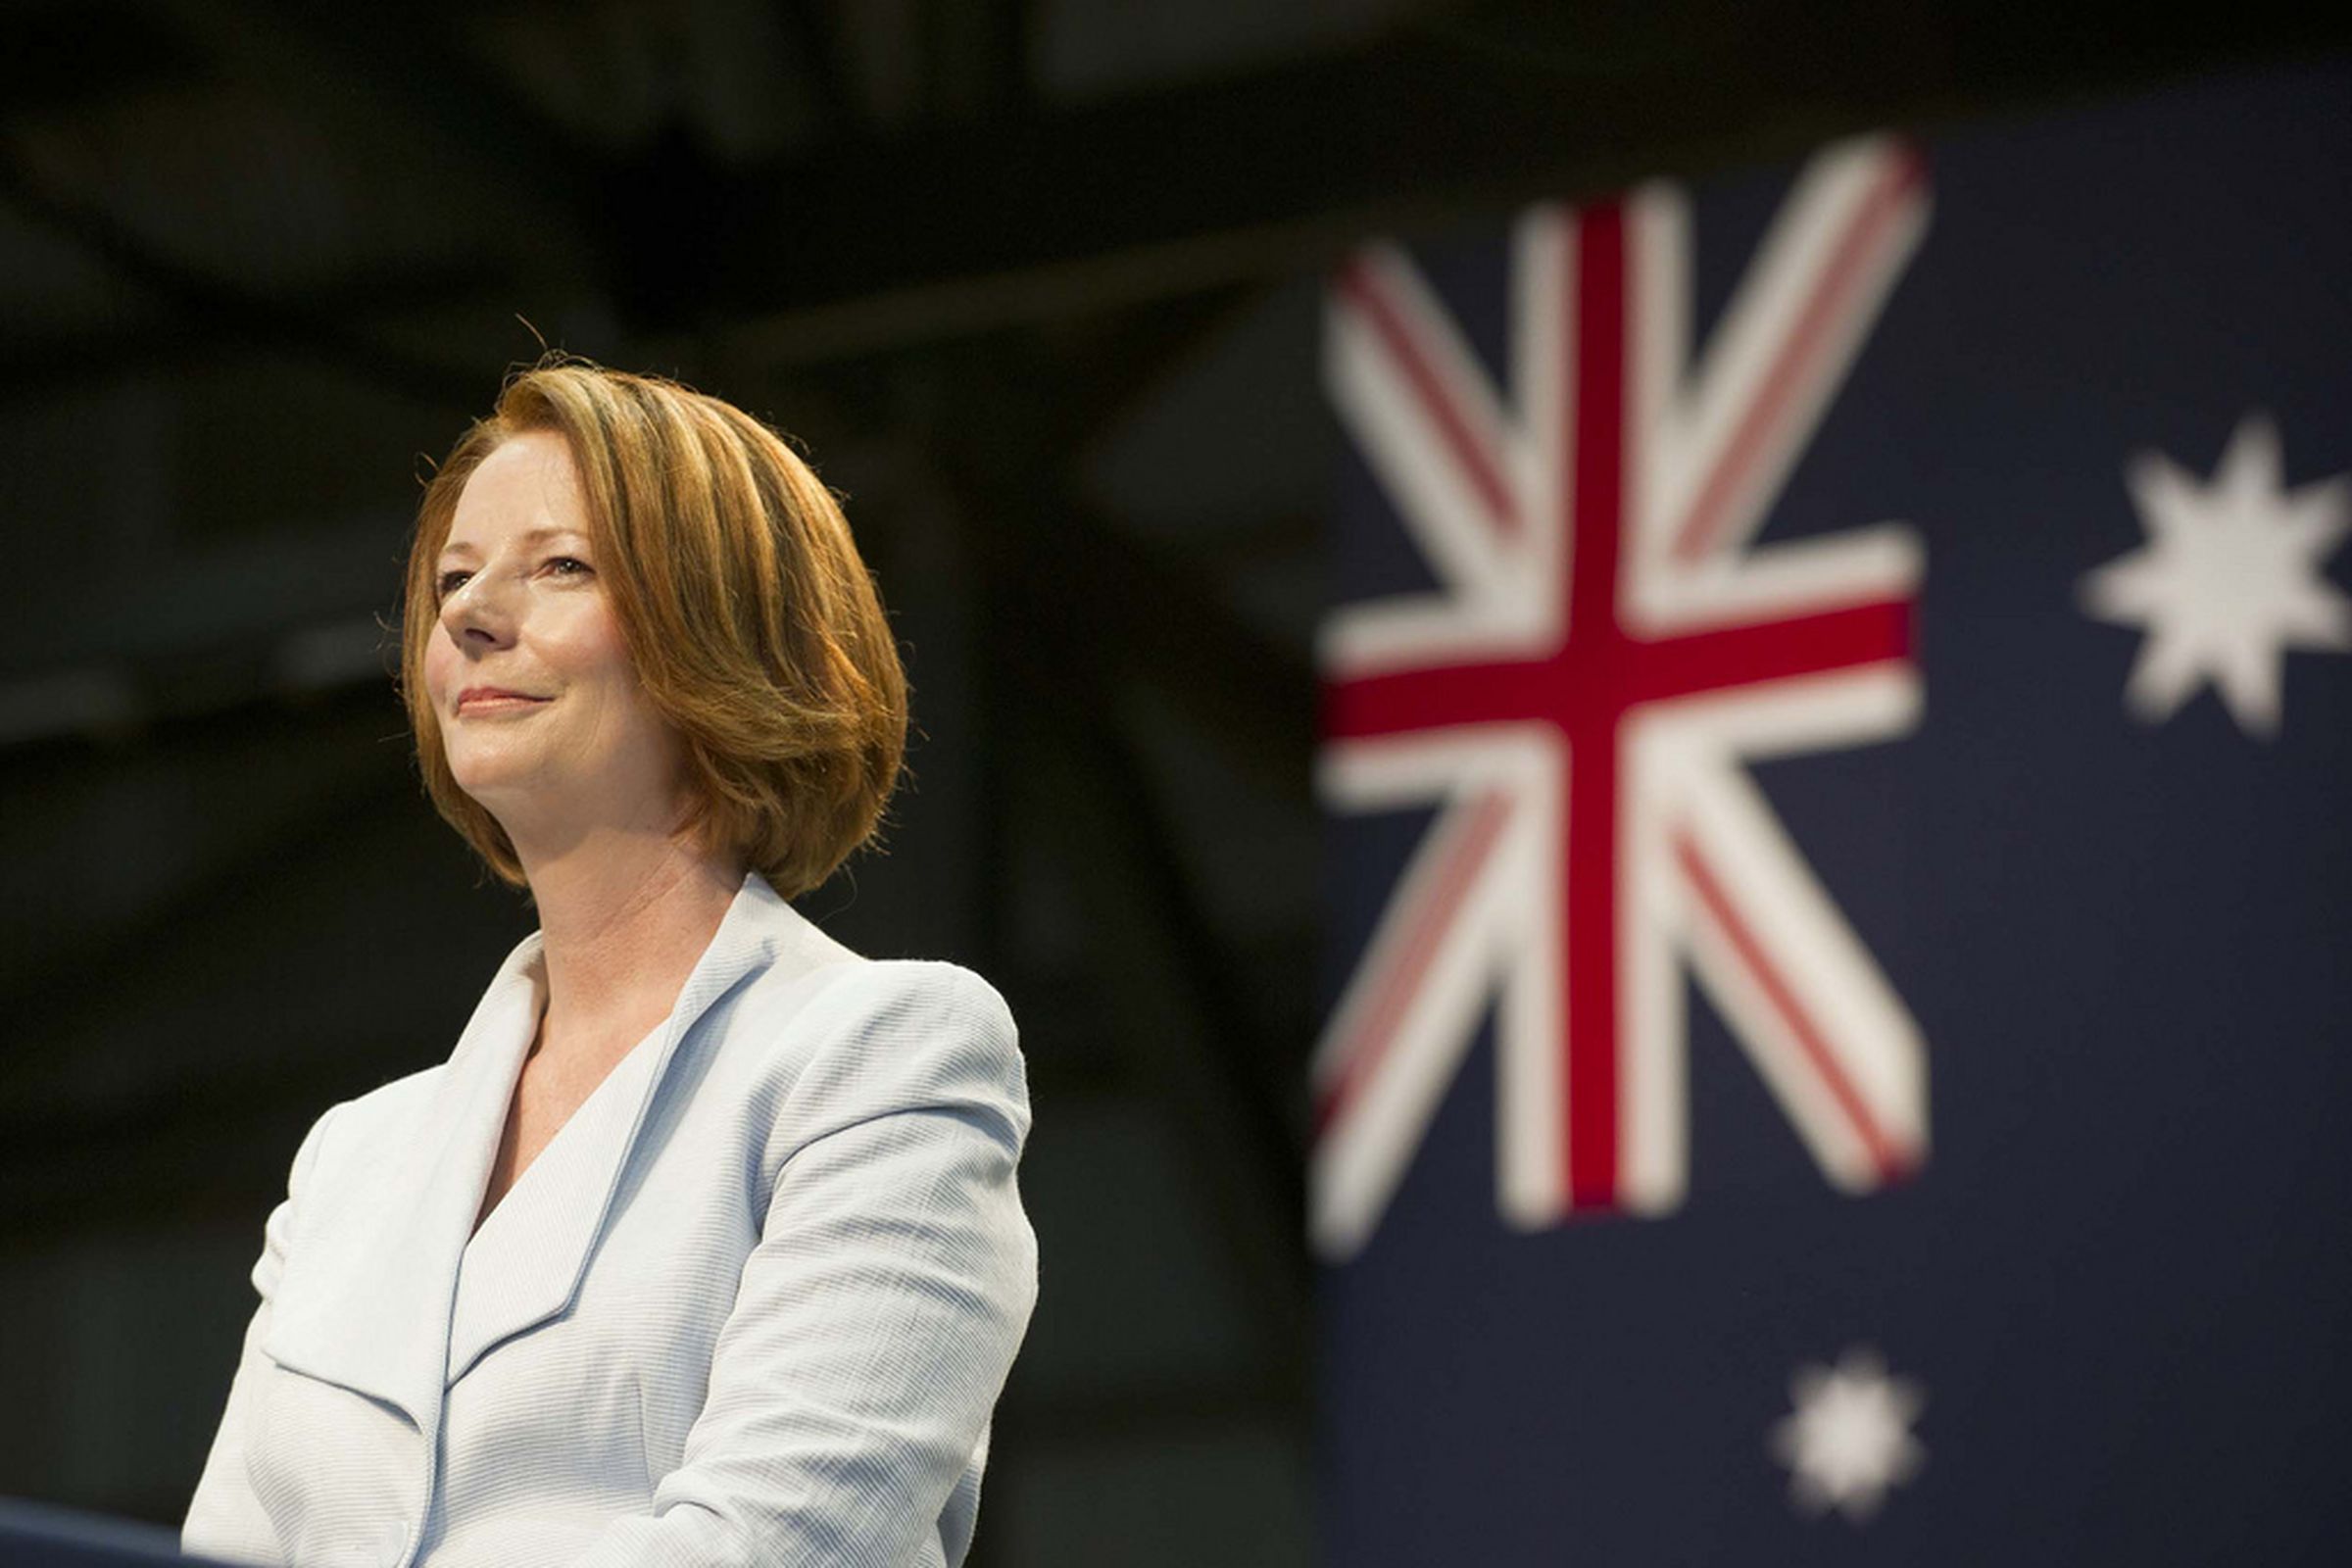 Austrlian Prime Minster Julia Gillard